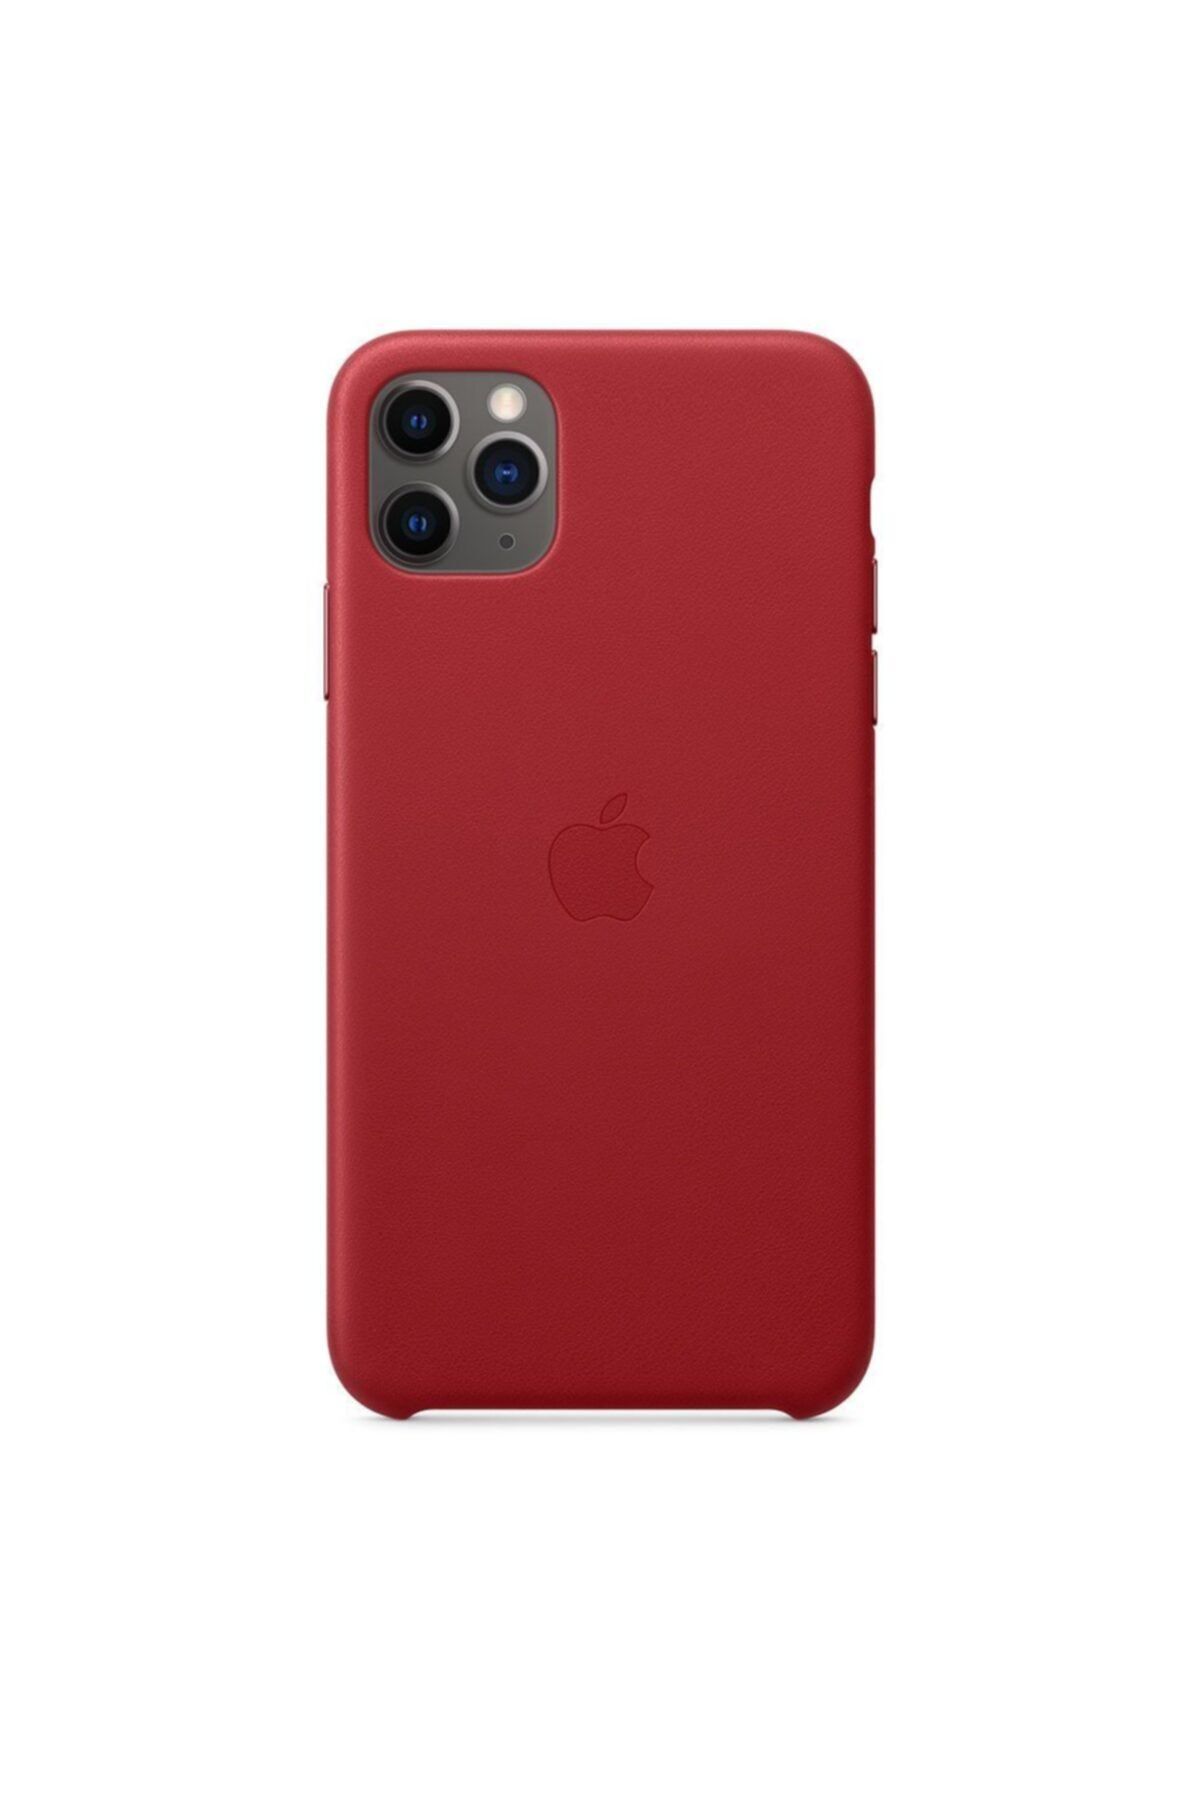 Apple Mx0f2zm/a Iphone 11 Pro Max Derı Kılıf Product Red